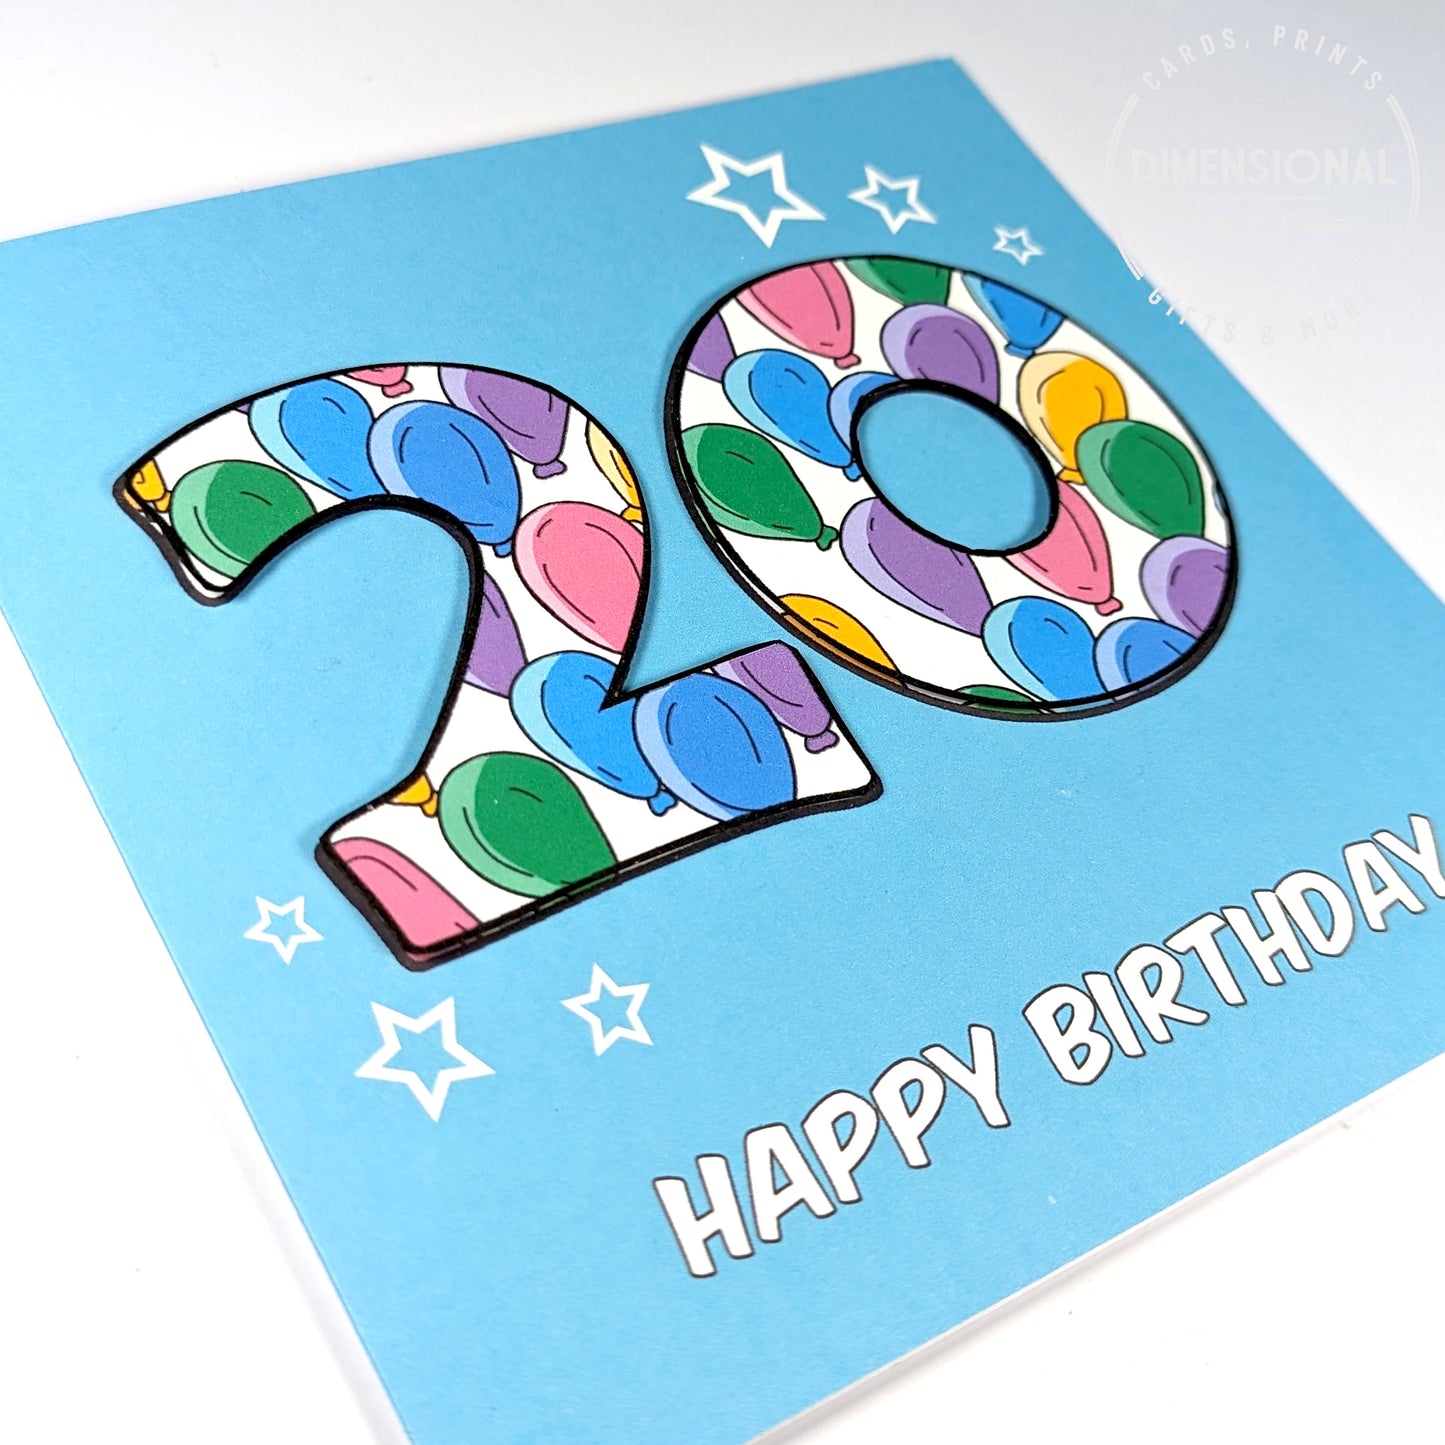 20th Birthday Card